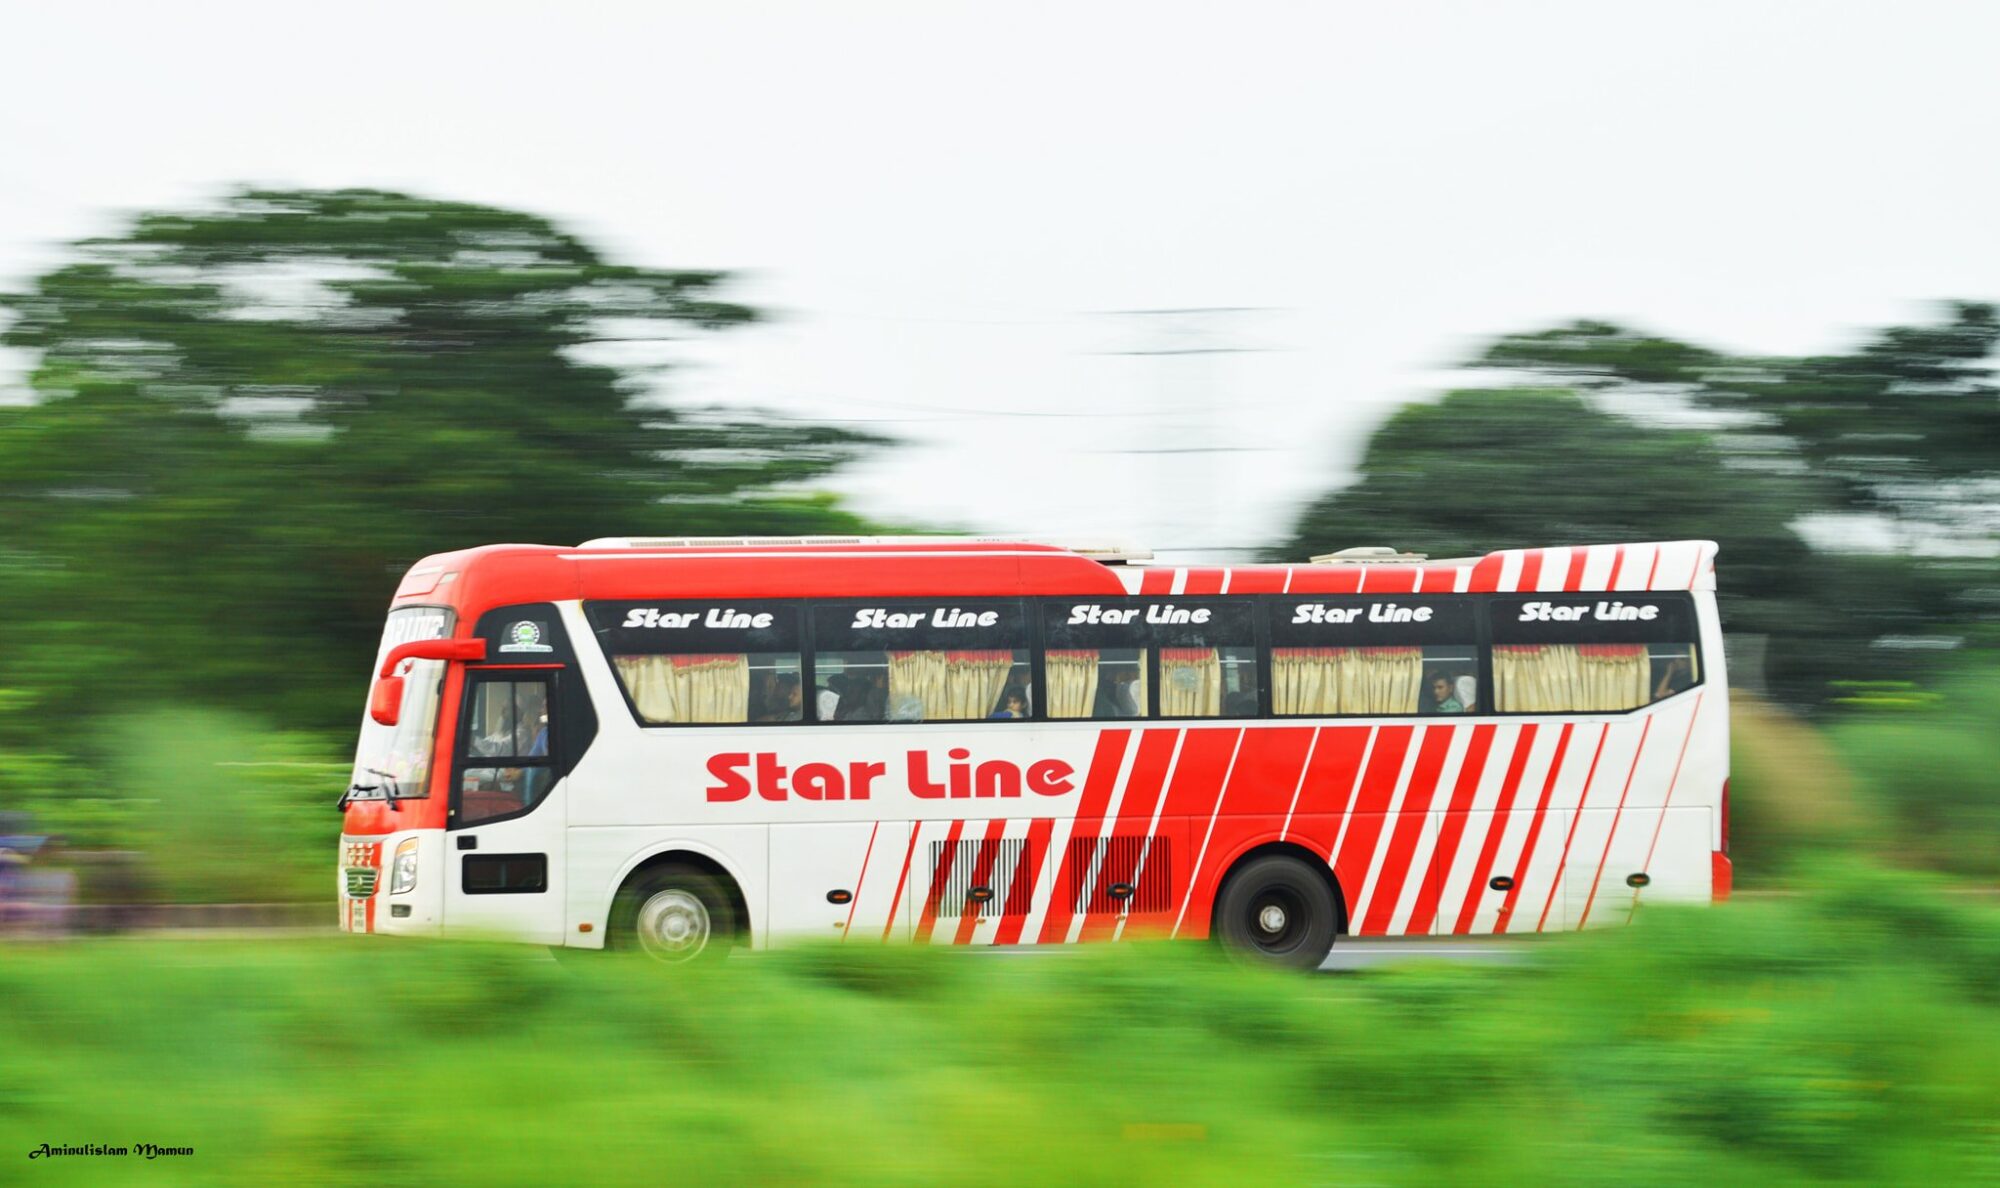 star line bus dhaka, cox's bazar number